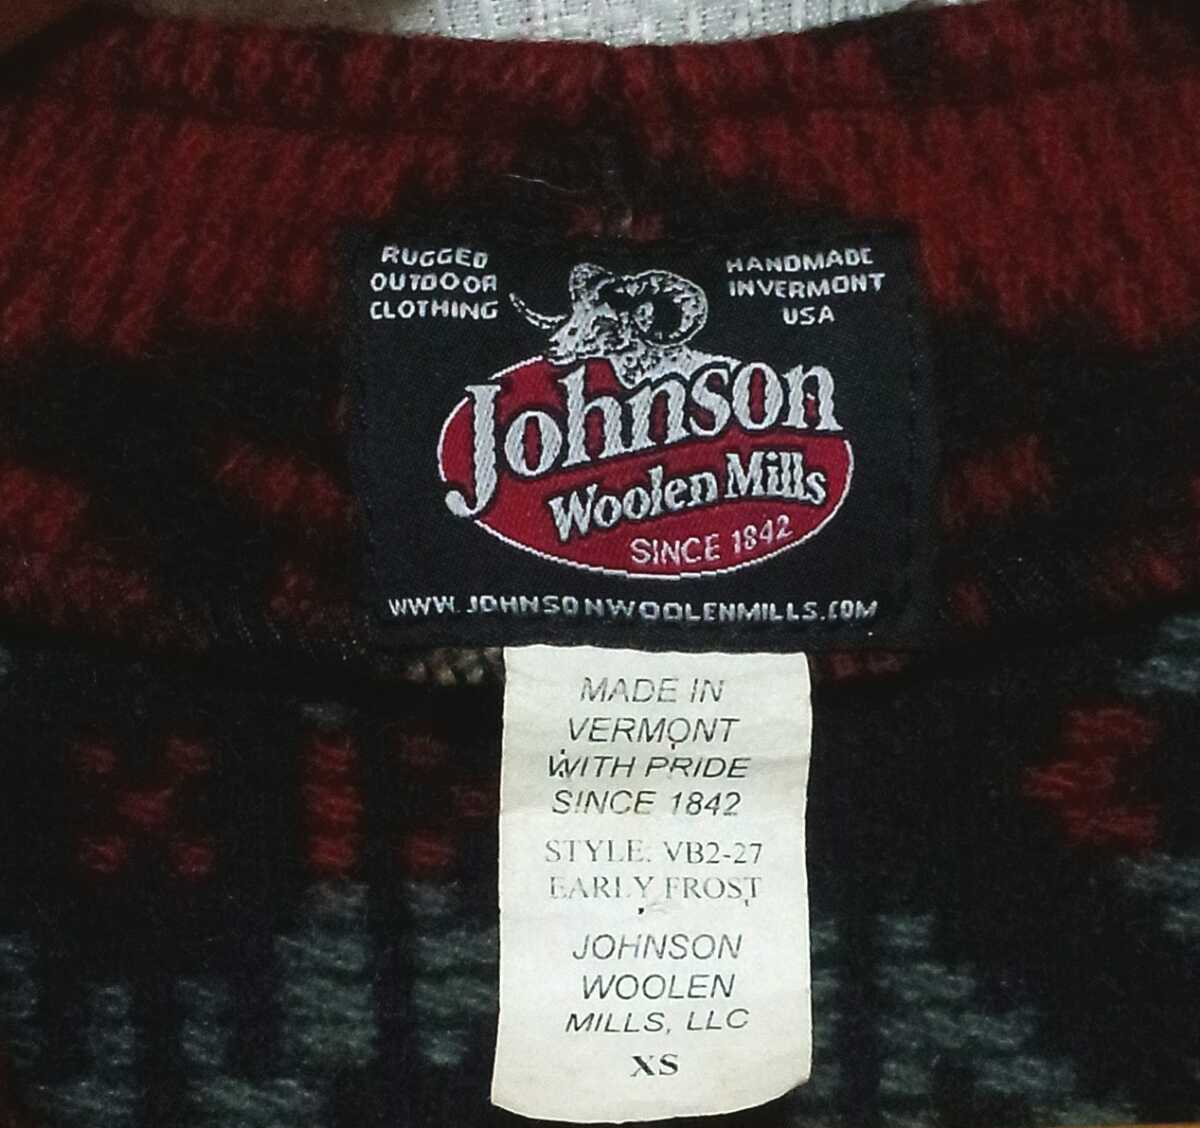 MADE IN USA производства Johnson Woolen Mills Johnson u- Len Mill zXSneitib рисунок VEST шерсть лучший America производства vintage Vintage Woolrich 